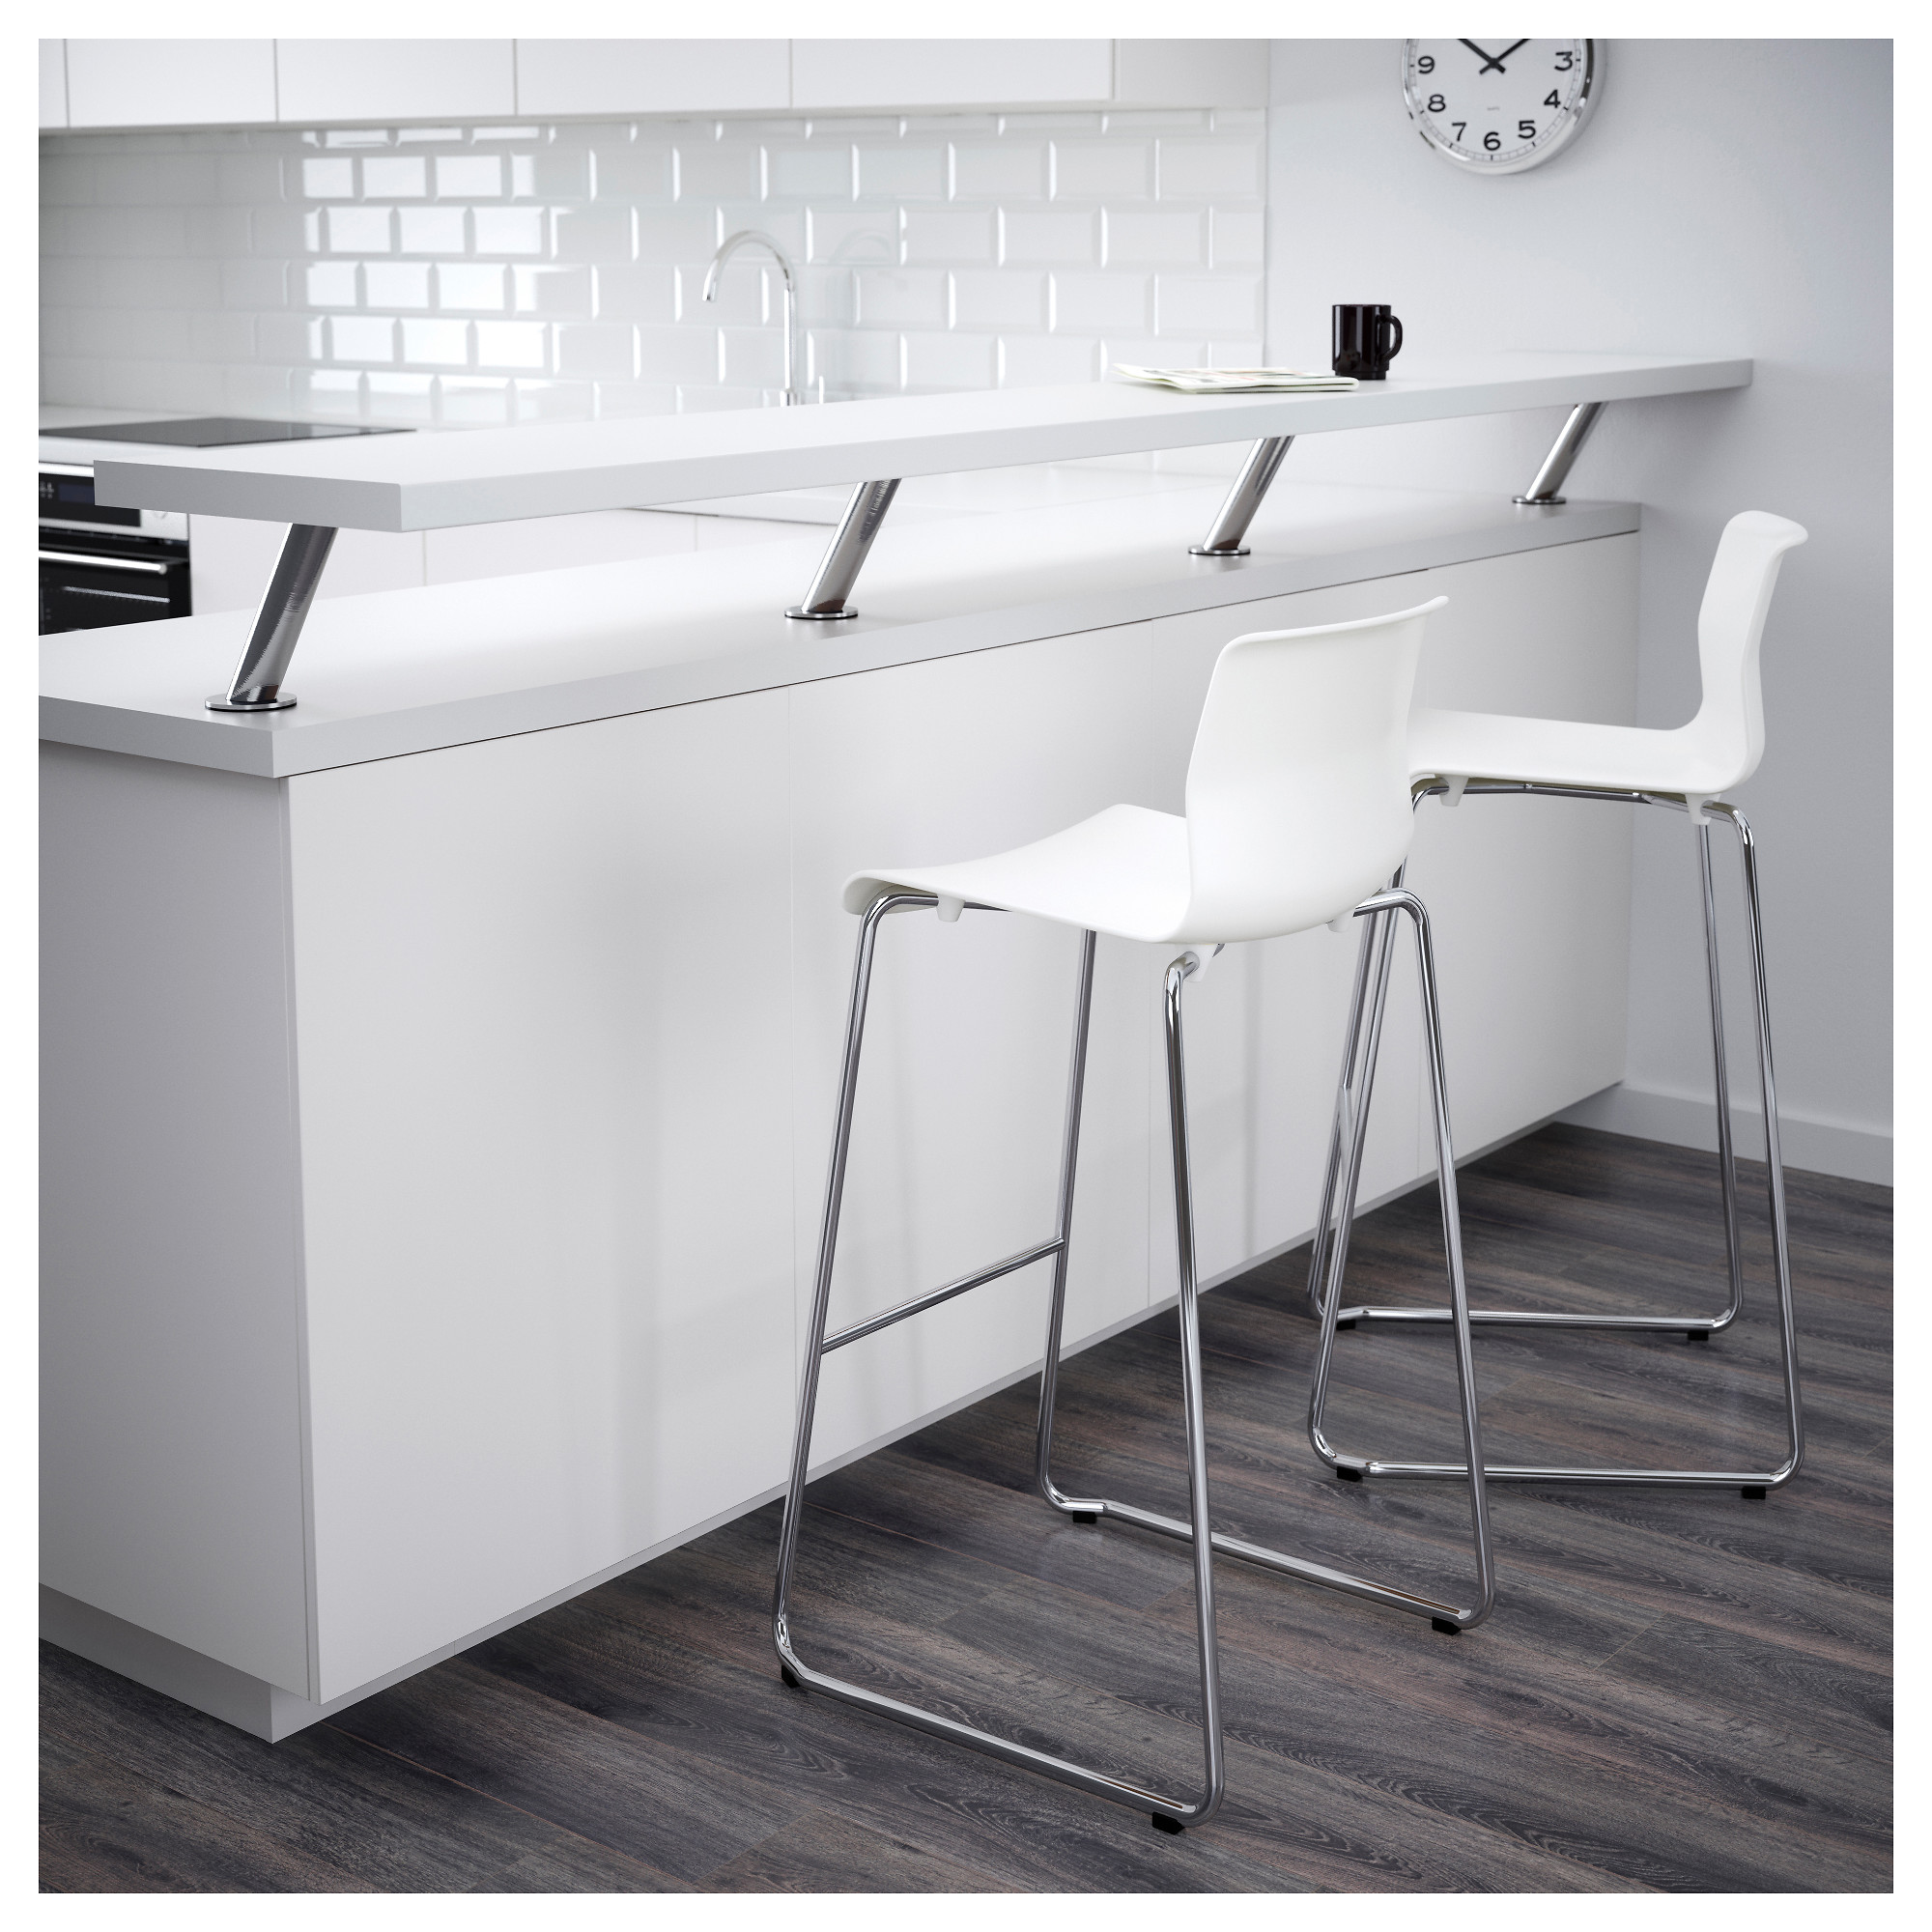 GLENN bar  stool  white chrome plated IKEA  Hong Kong 